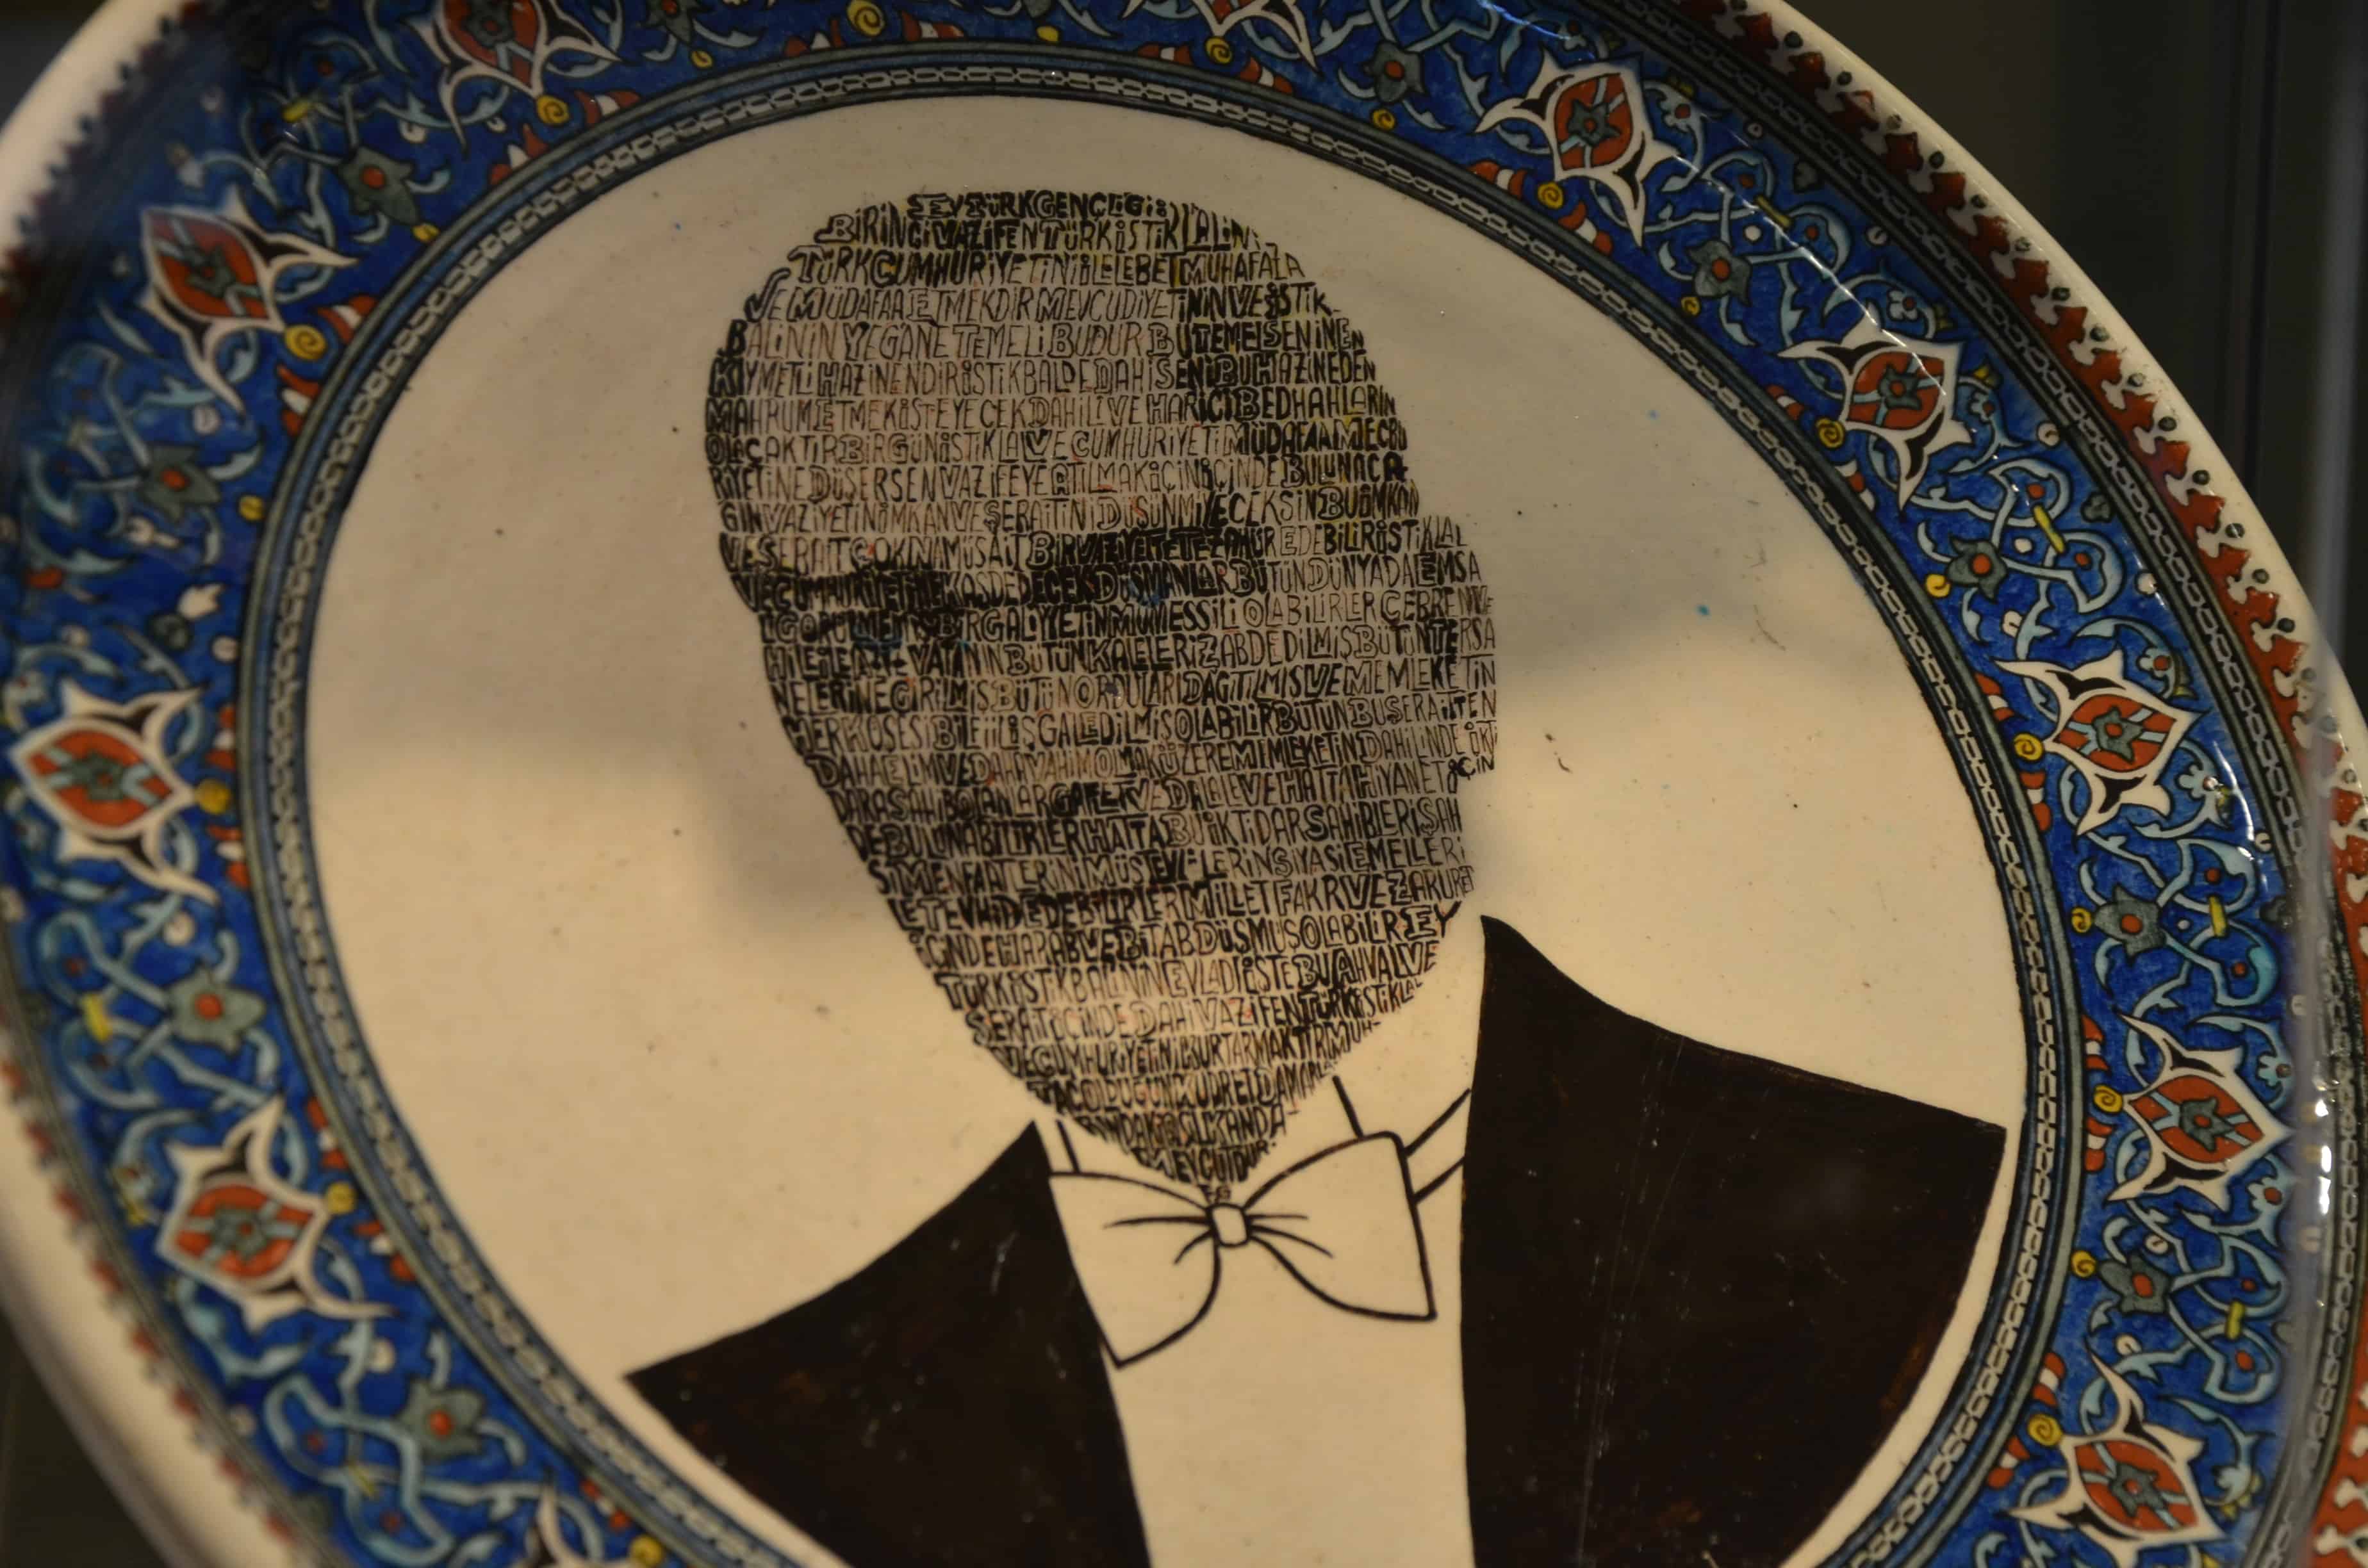 Decorative plate of Atatürk